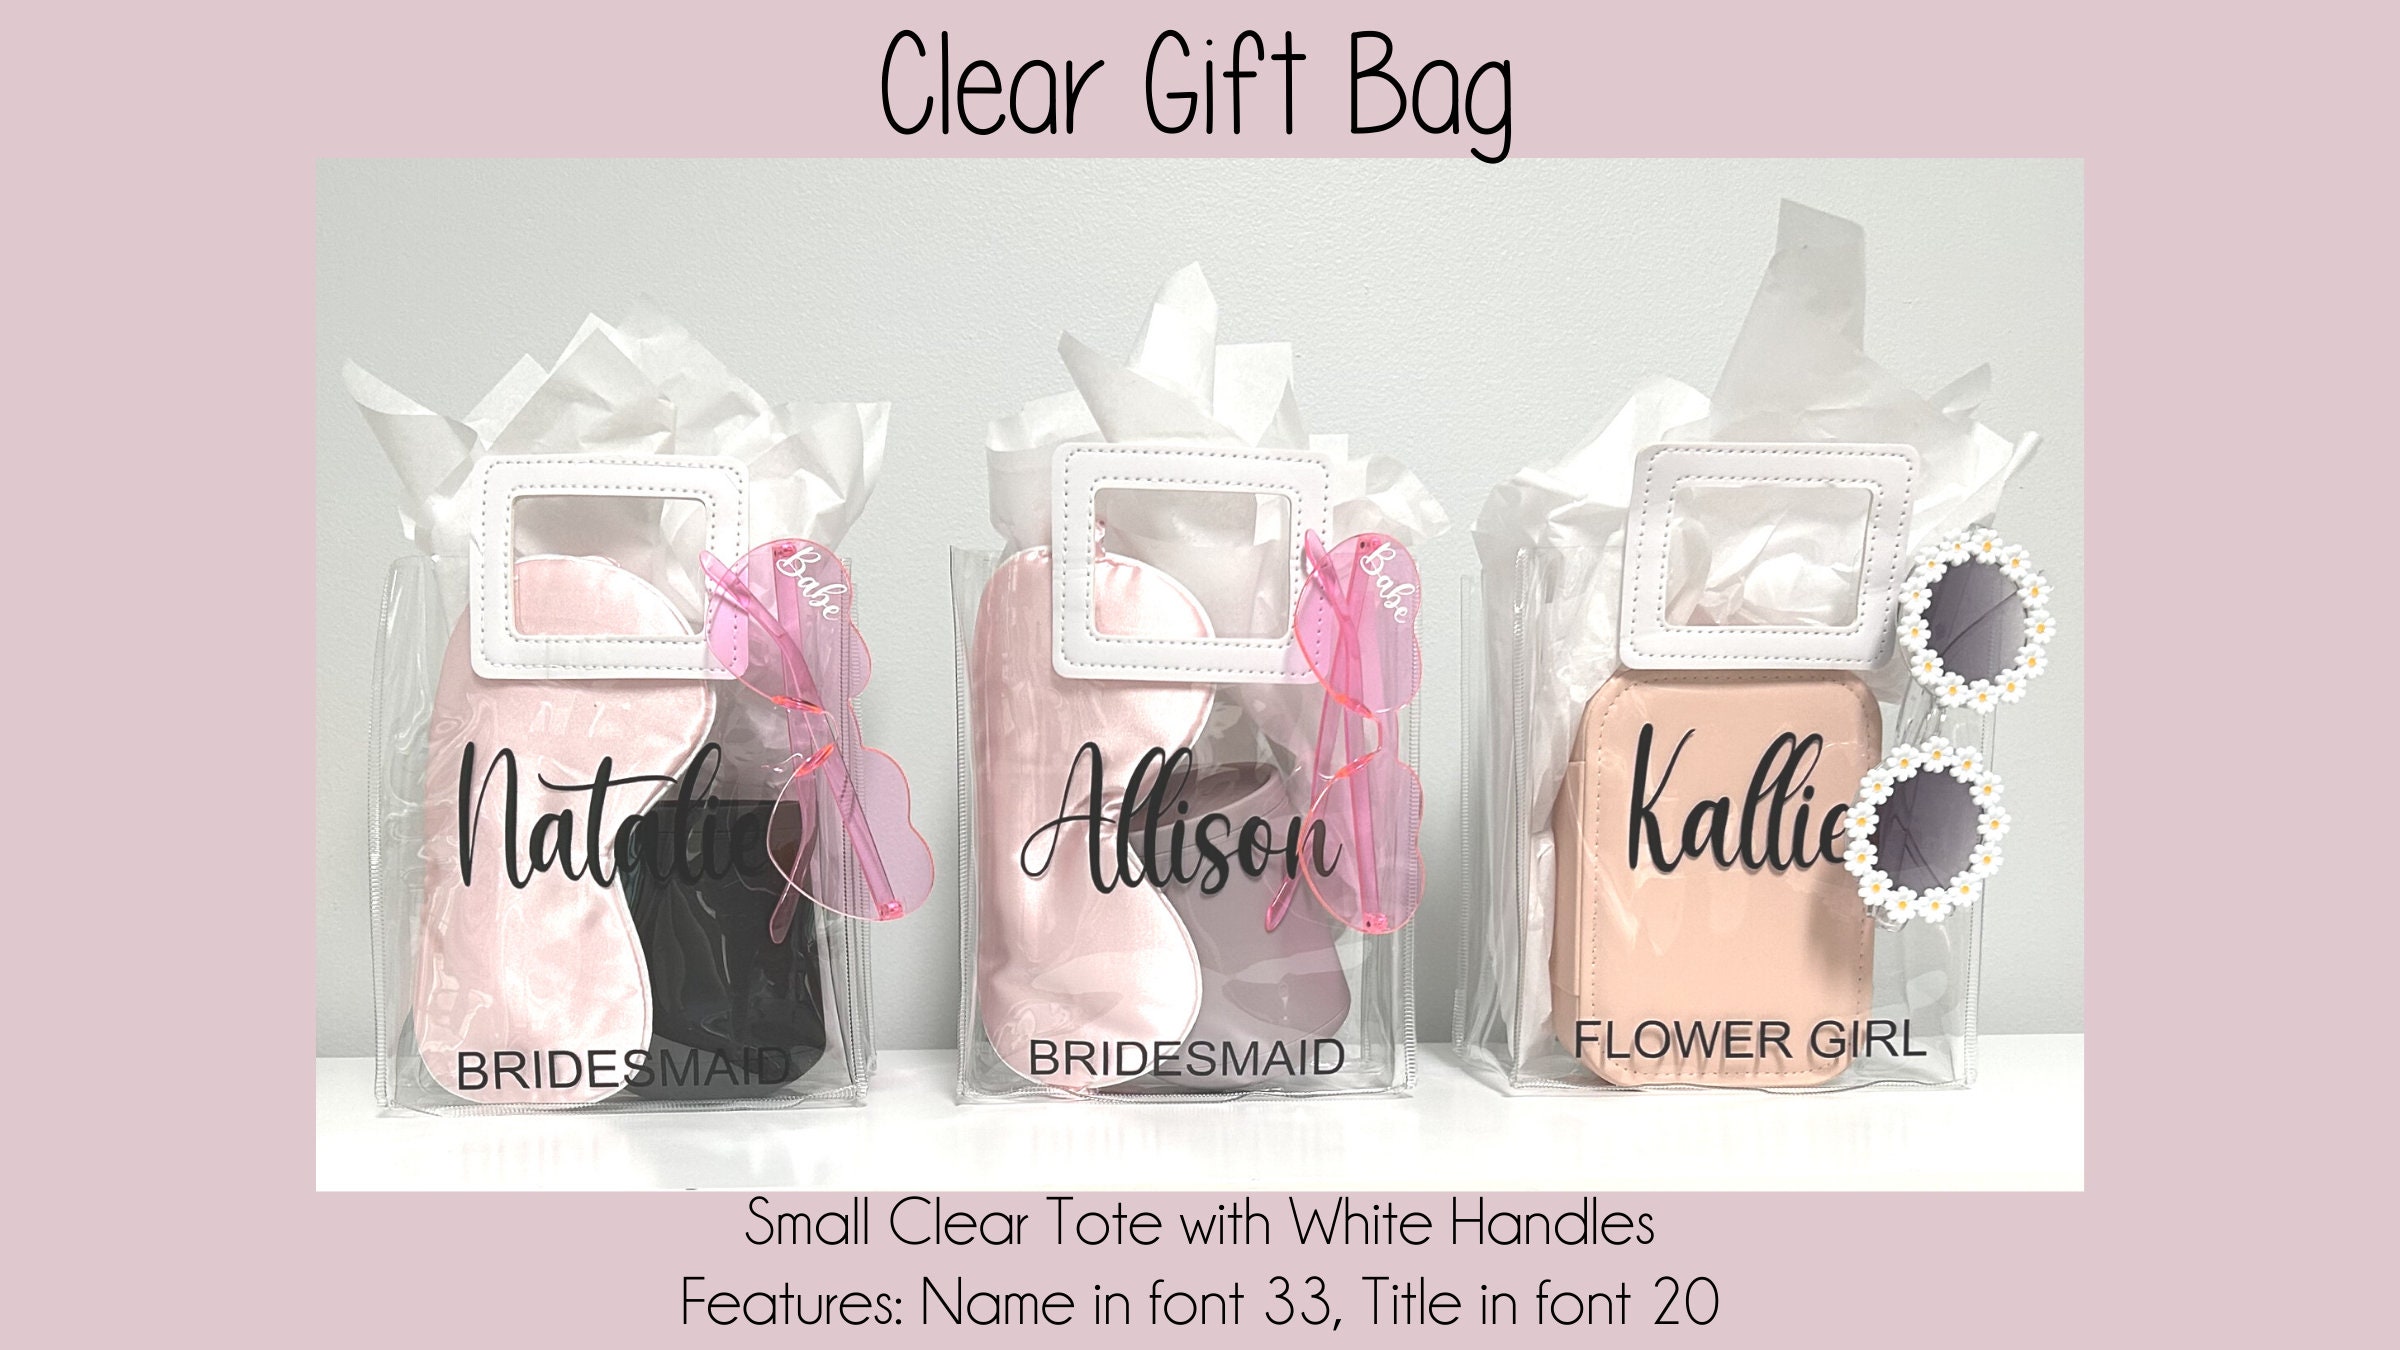 clear gift bag ideas